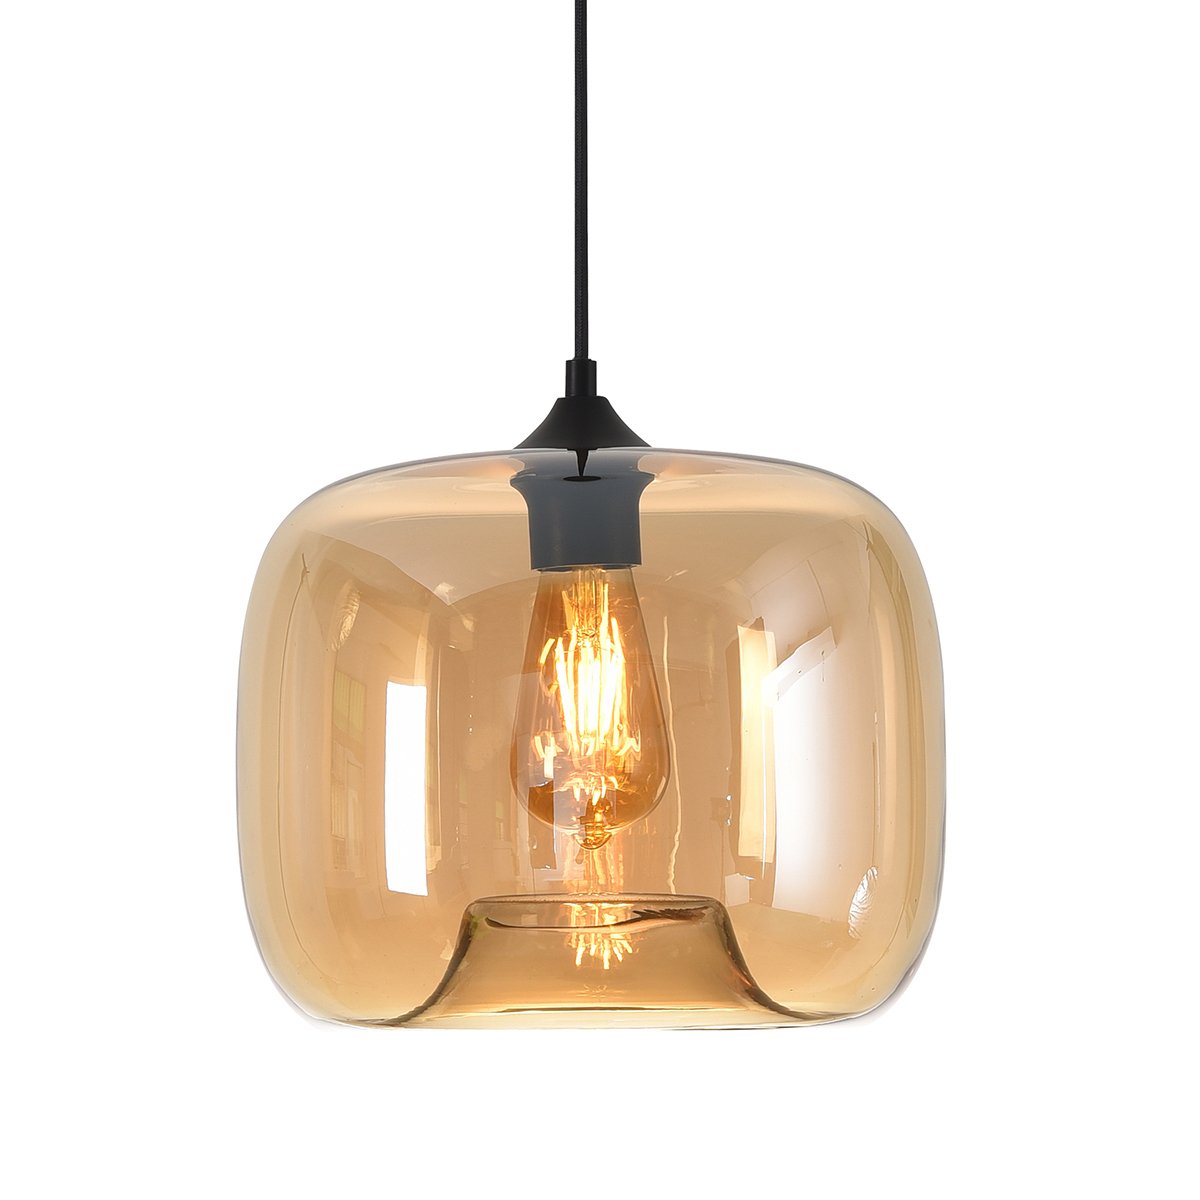 Ook Partina City Verrijking Plafondlamp rond amber glas Erula - Ø 28 cm | Manves.nl